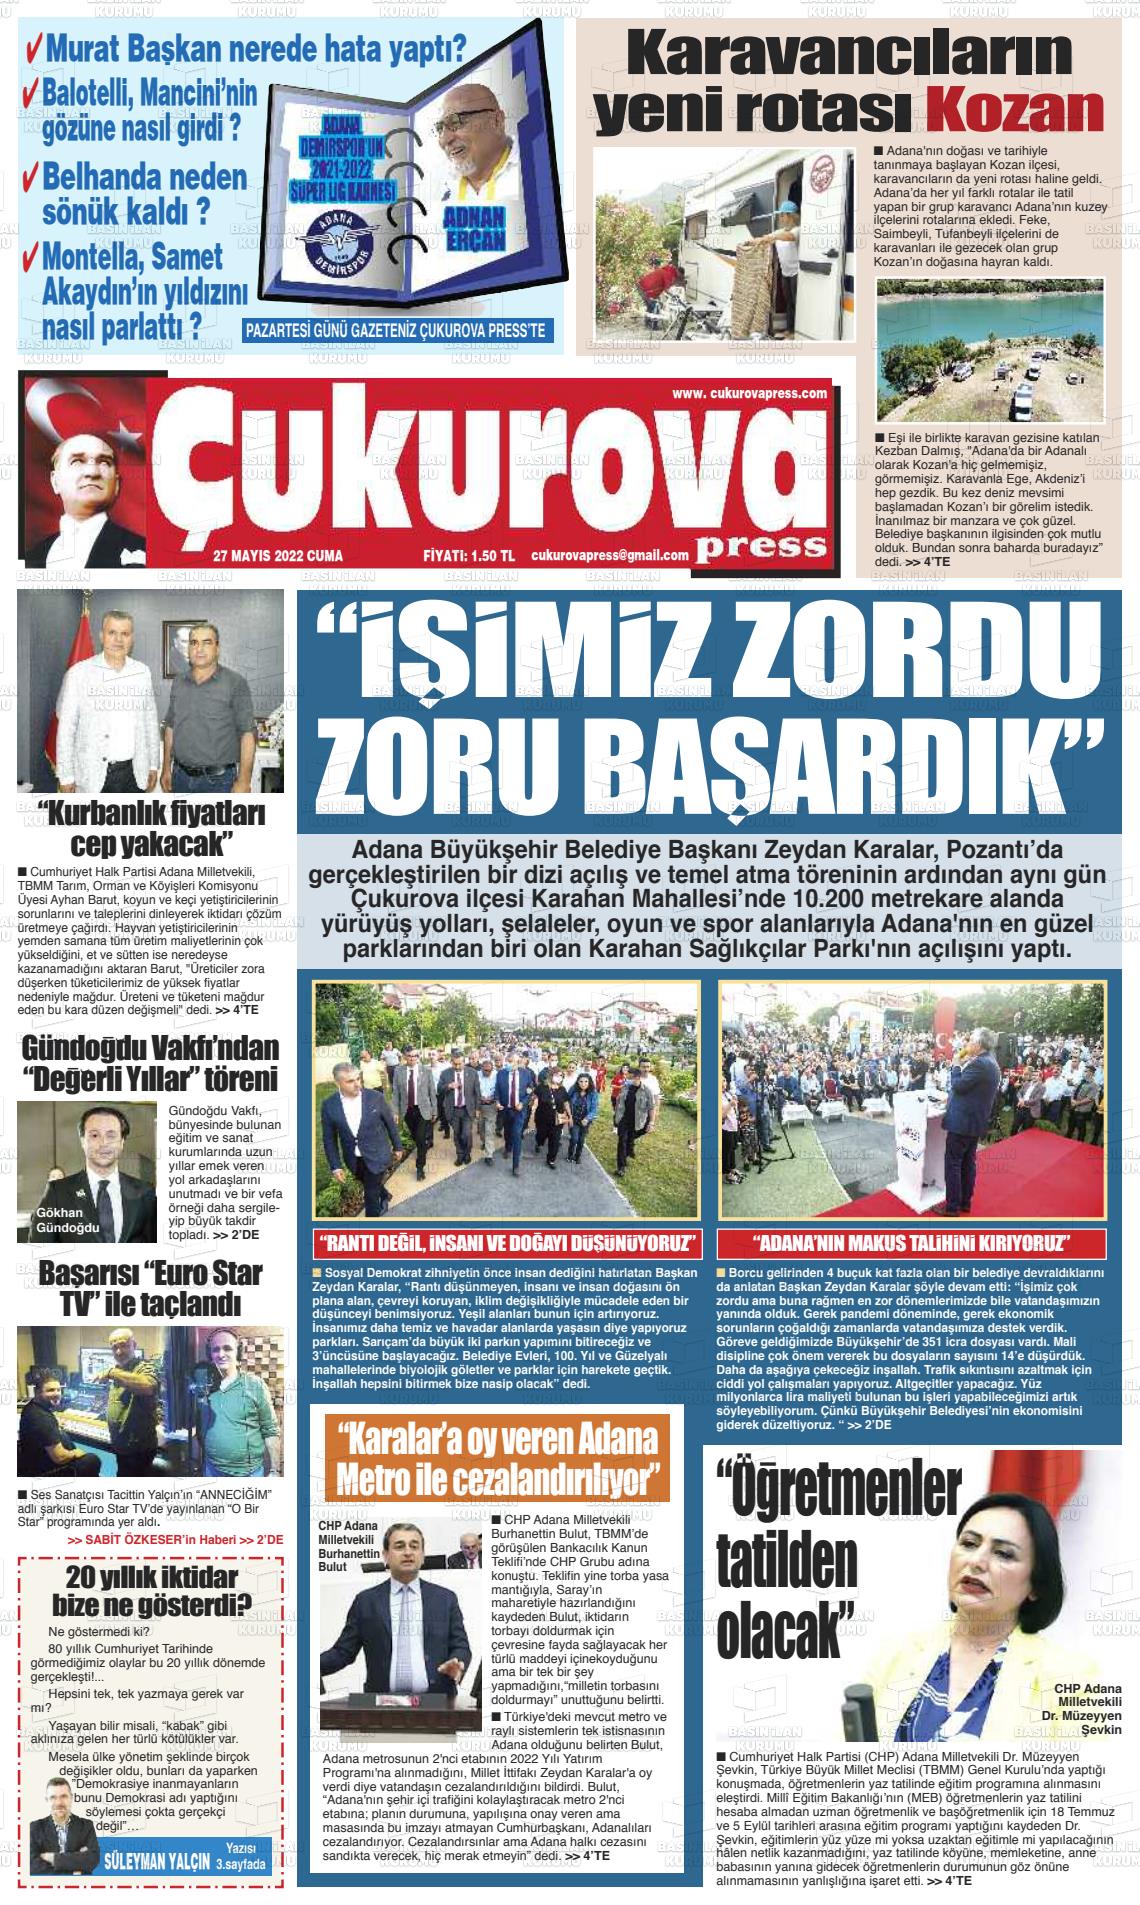 27 Mayıs 2022 Çukurova Press Gazete Manşeti